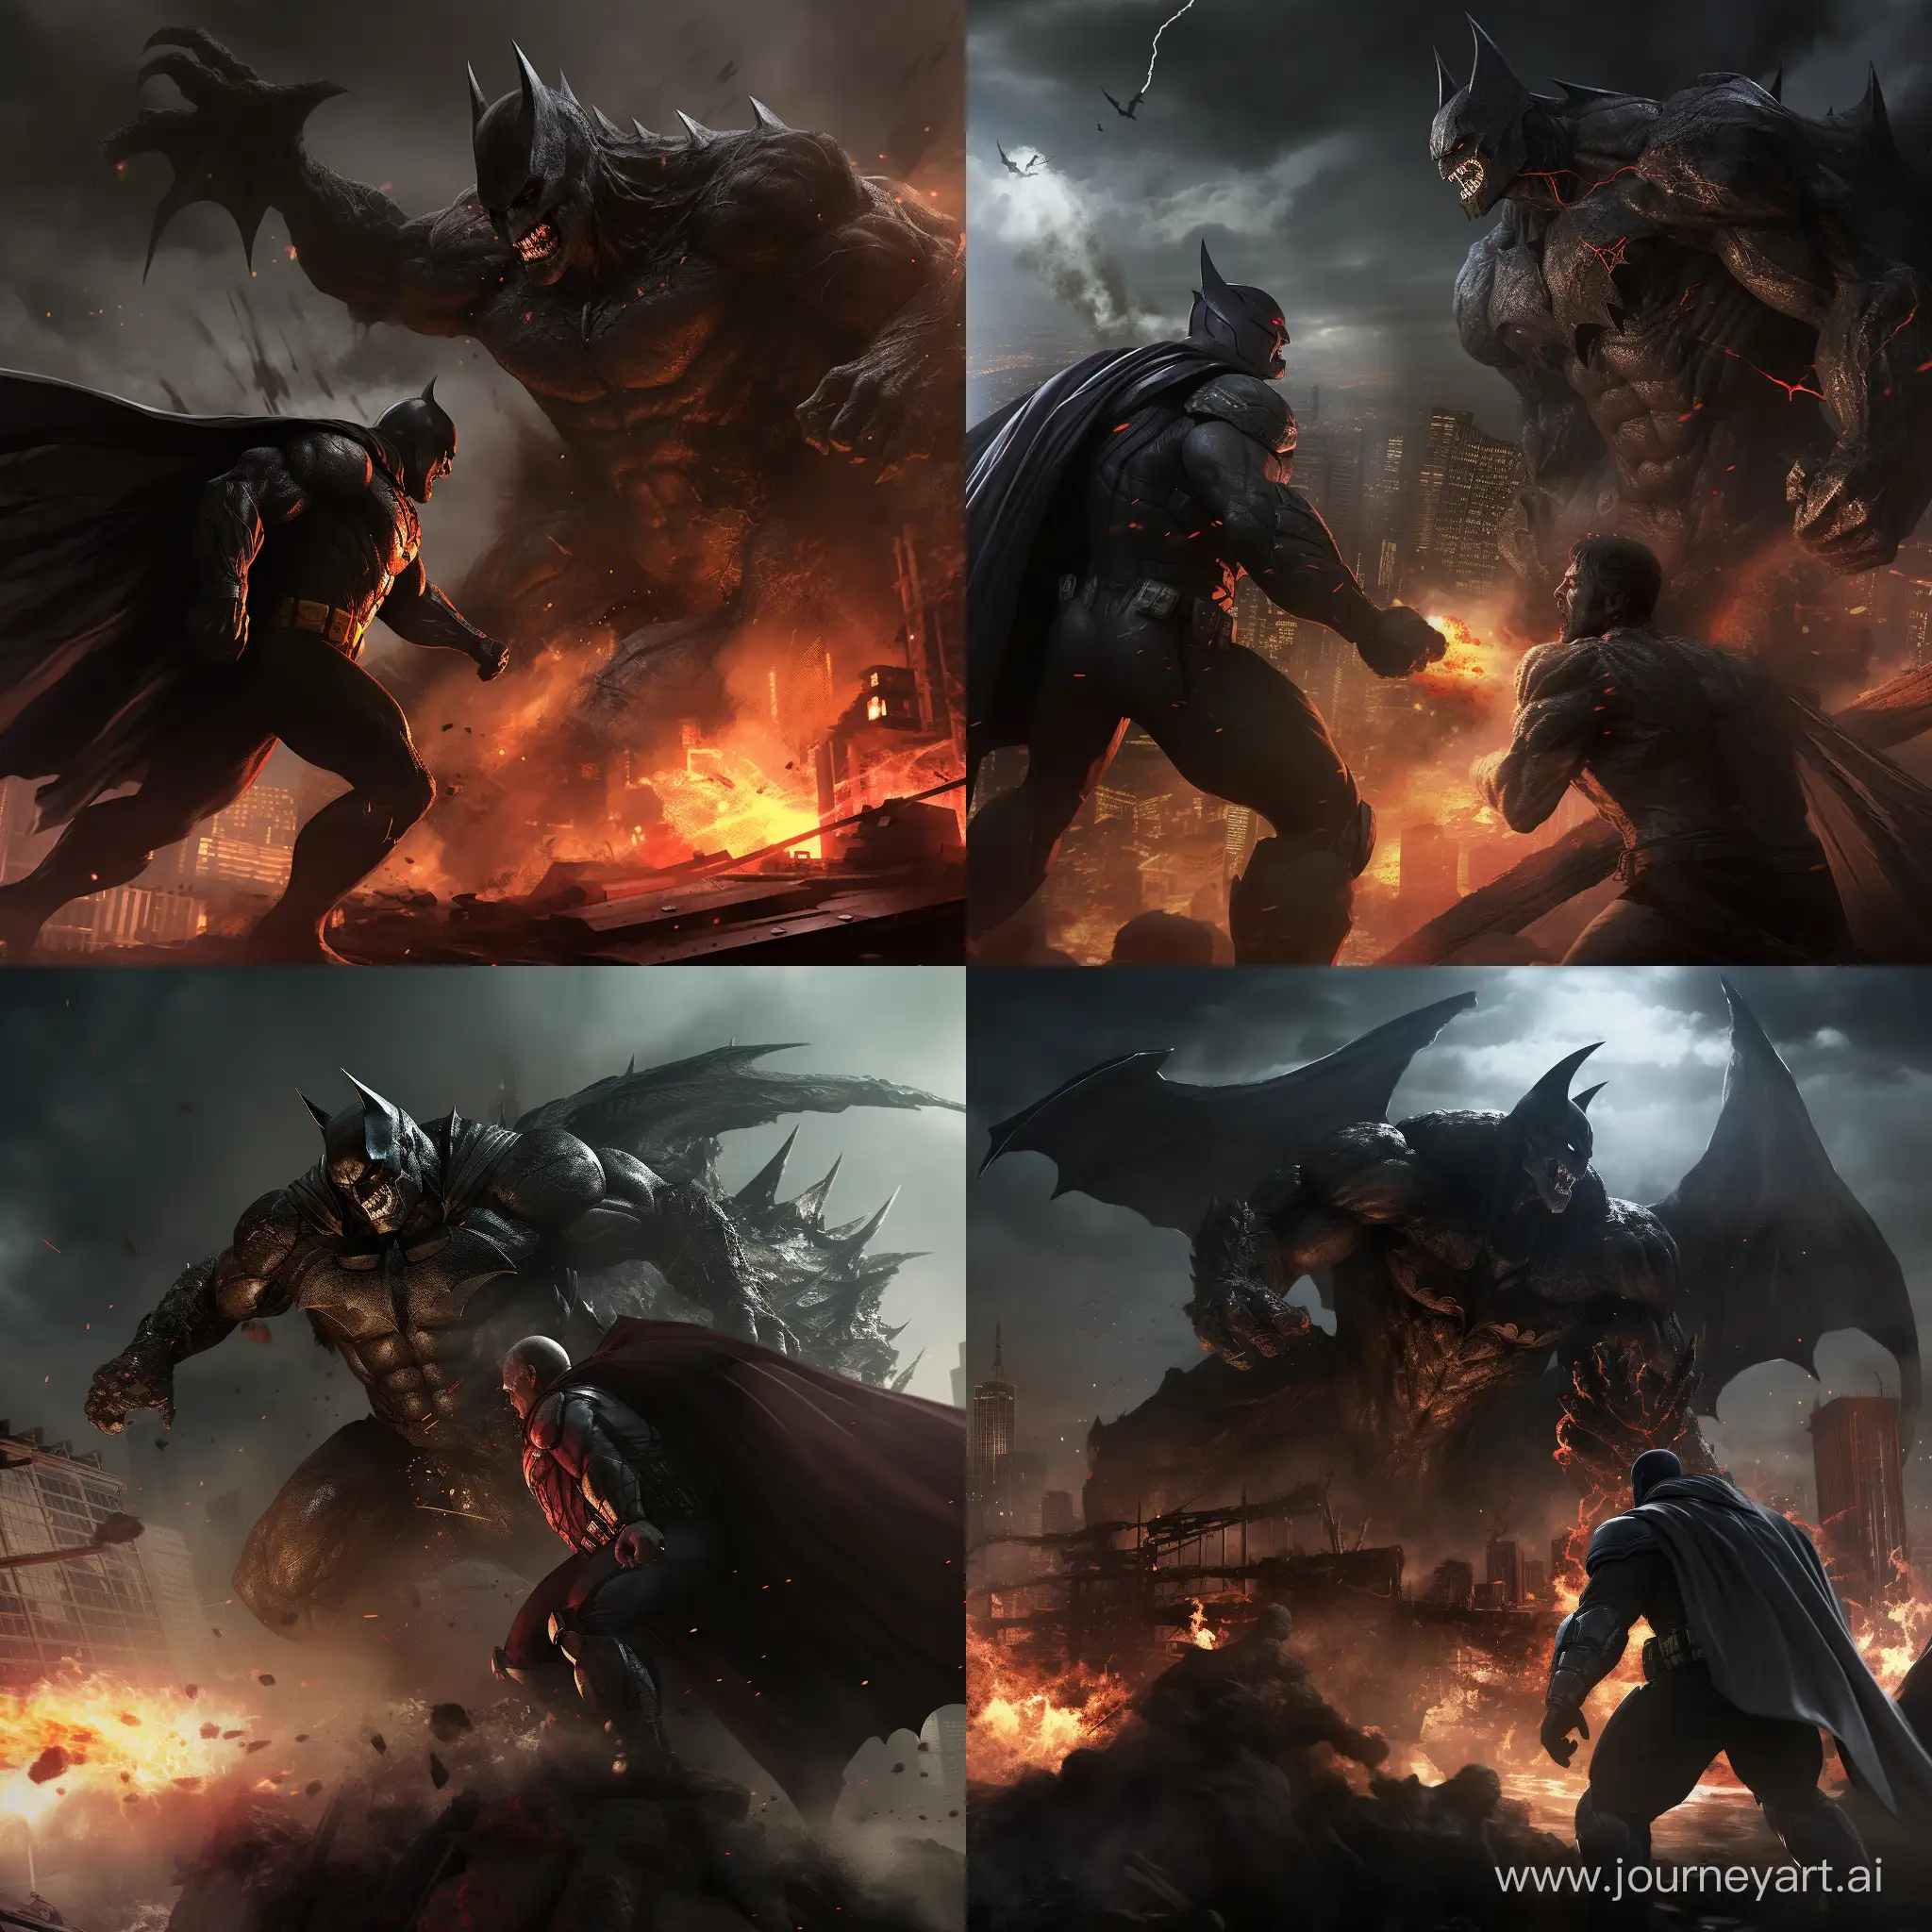 Epic-Battle-Batman-Confronts-Godzilla-in-Apocalyptic-City